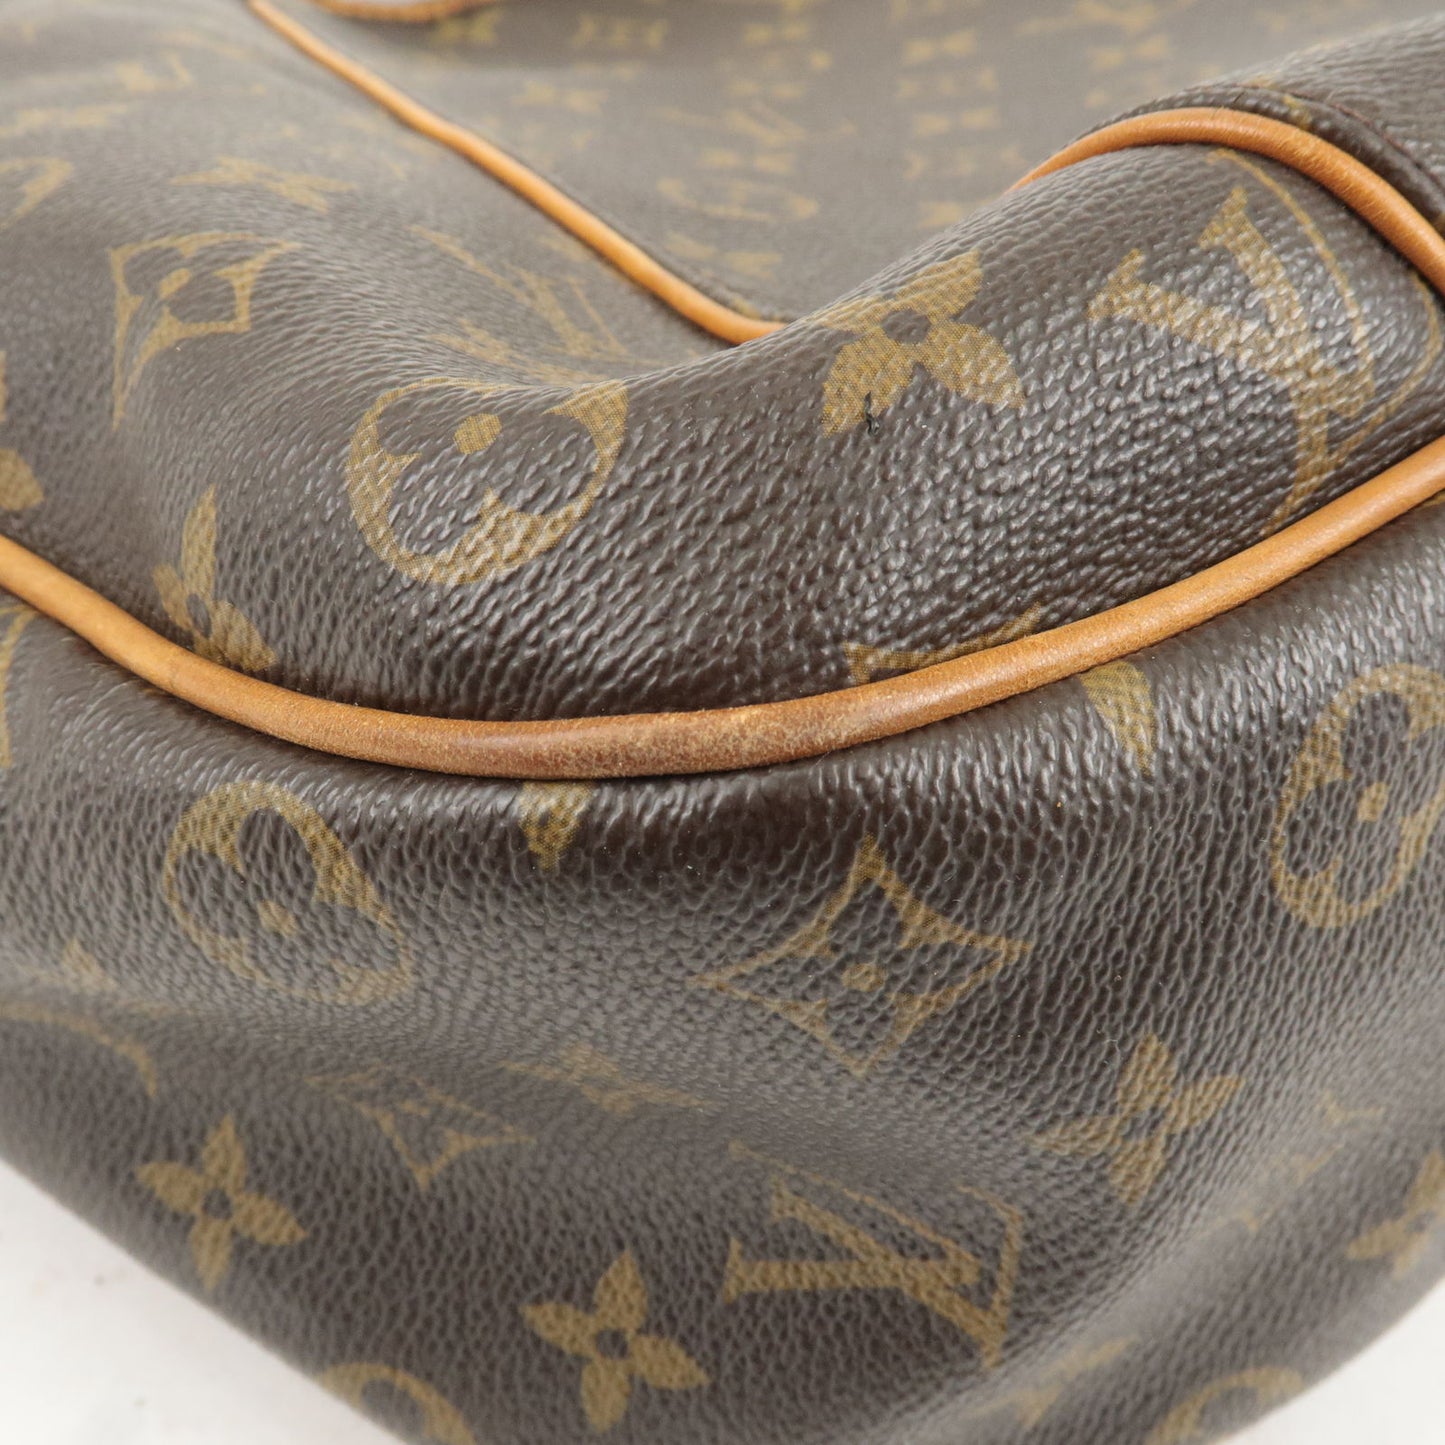 Louis Vuitton Monogram Galliera PM Shoulder Bag M56382